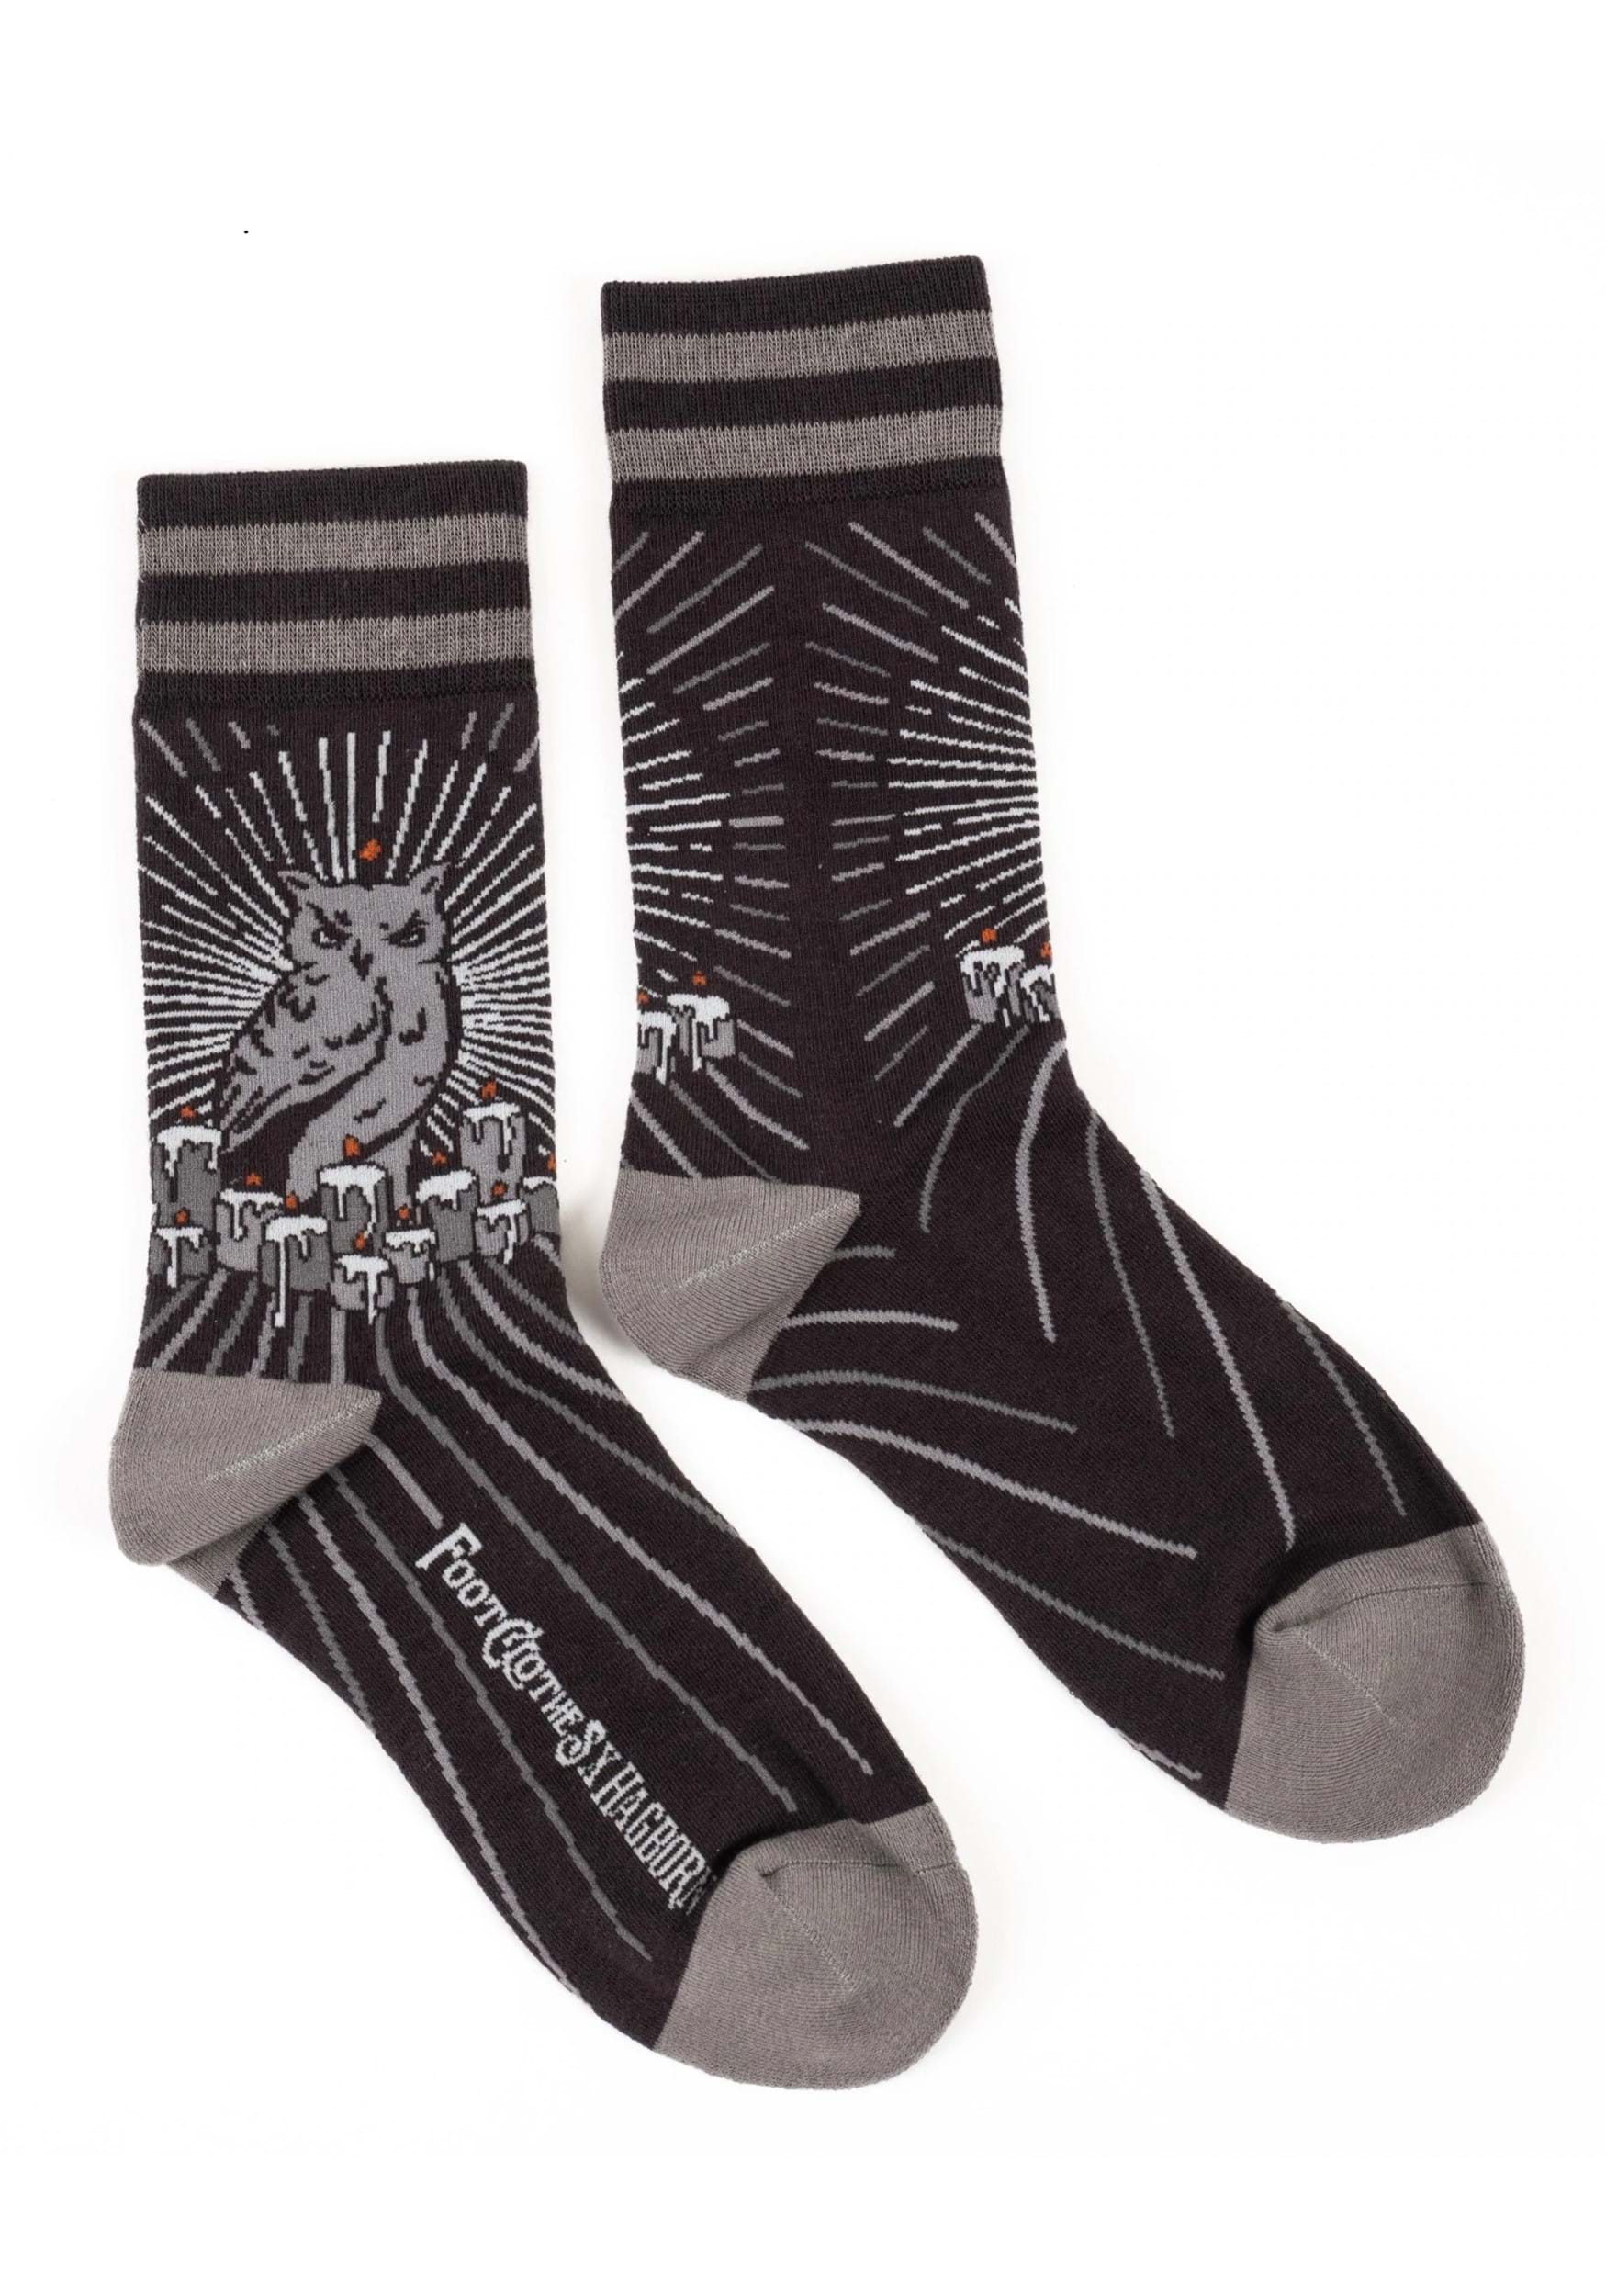 Adult Night Owl FootClothes x Hagborn Collab Socks